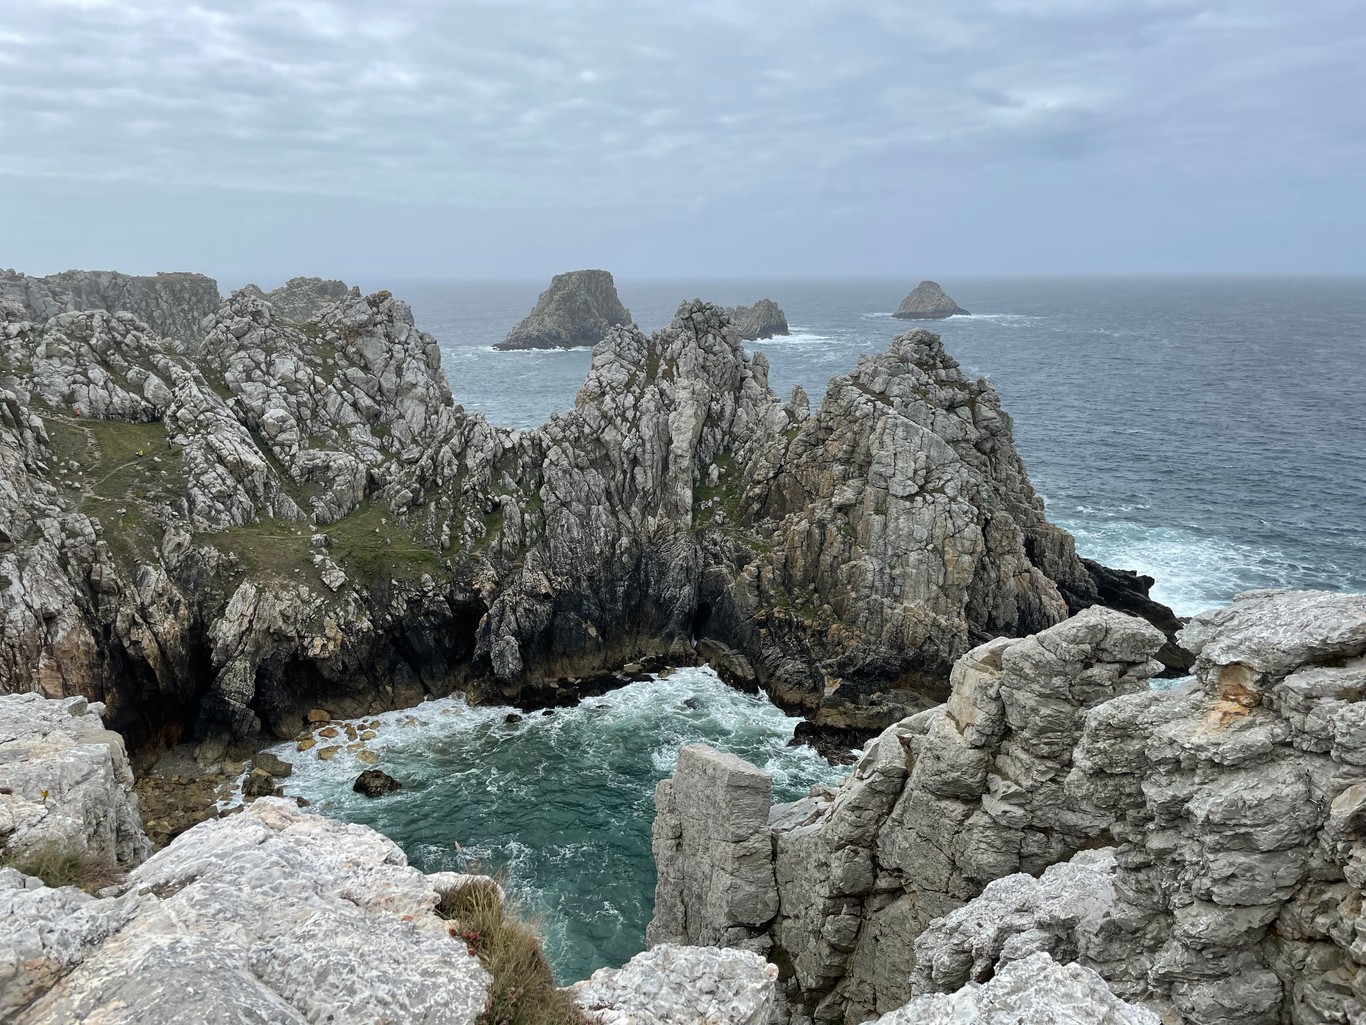 Sharp rocky cliffs giving way to a choppy sea under hazy skies